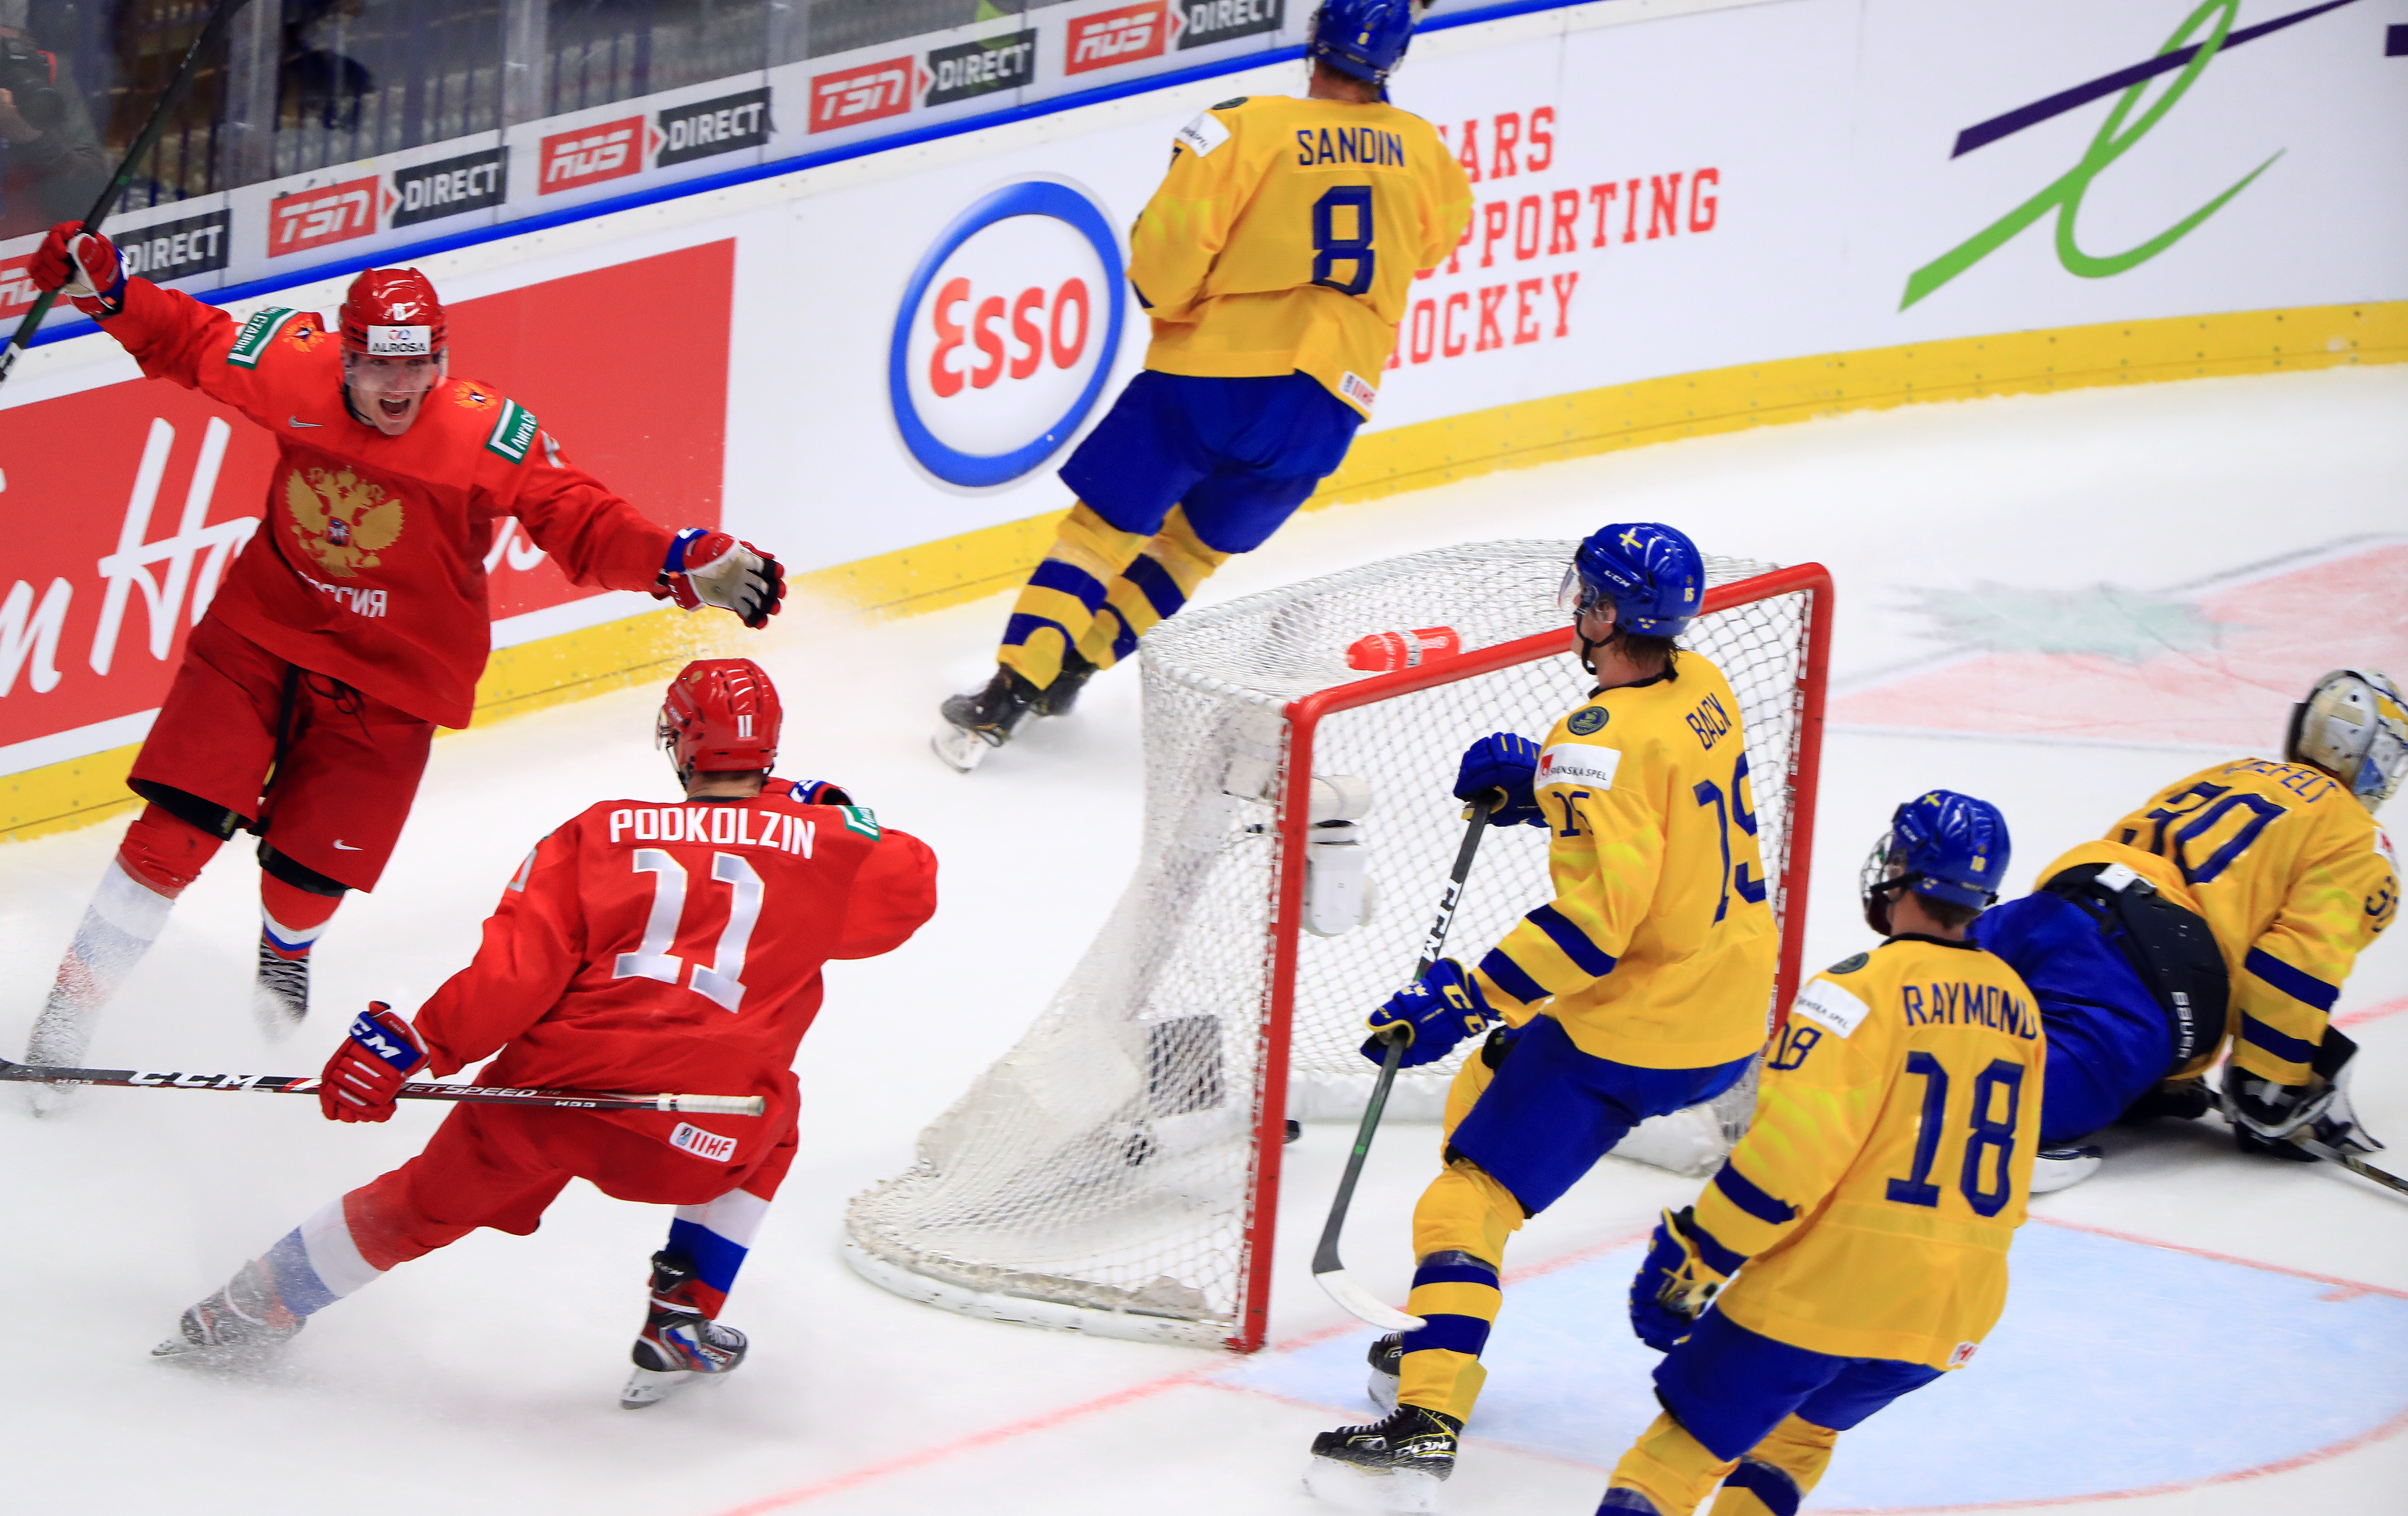 Russia’s Ivan Morozov and Vasily Podkolzin (L-R) celebrate scoring in the 2020 World Junior Ice Hockey Championship semifinal match against Sweden at Ostravar Arena. Peter